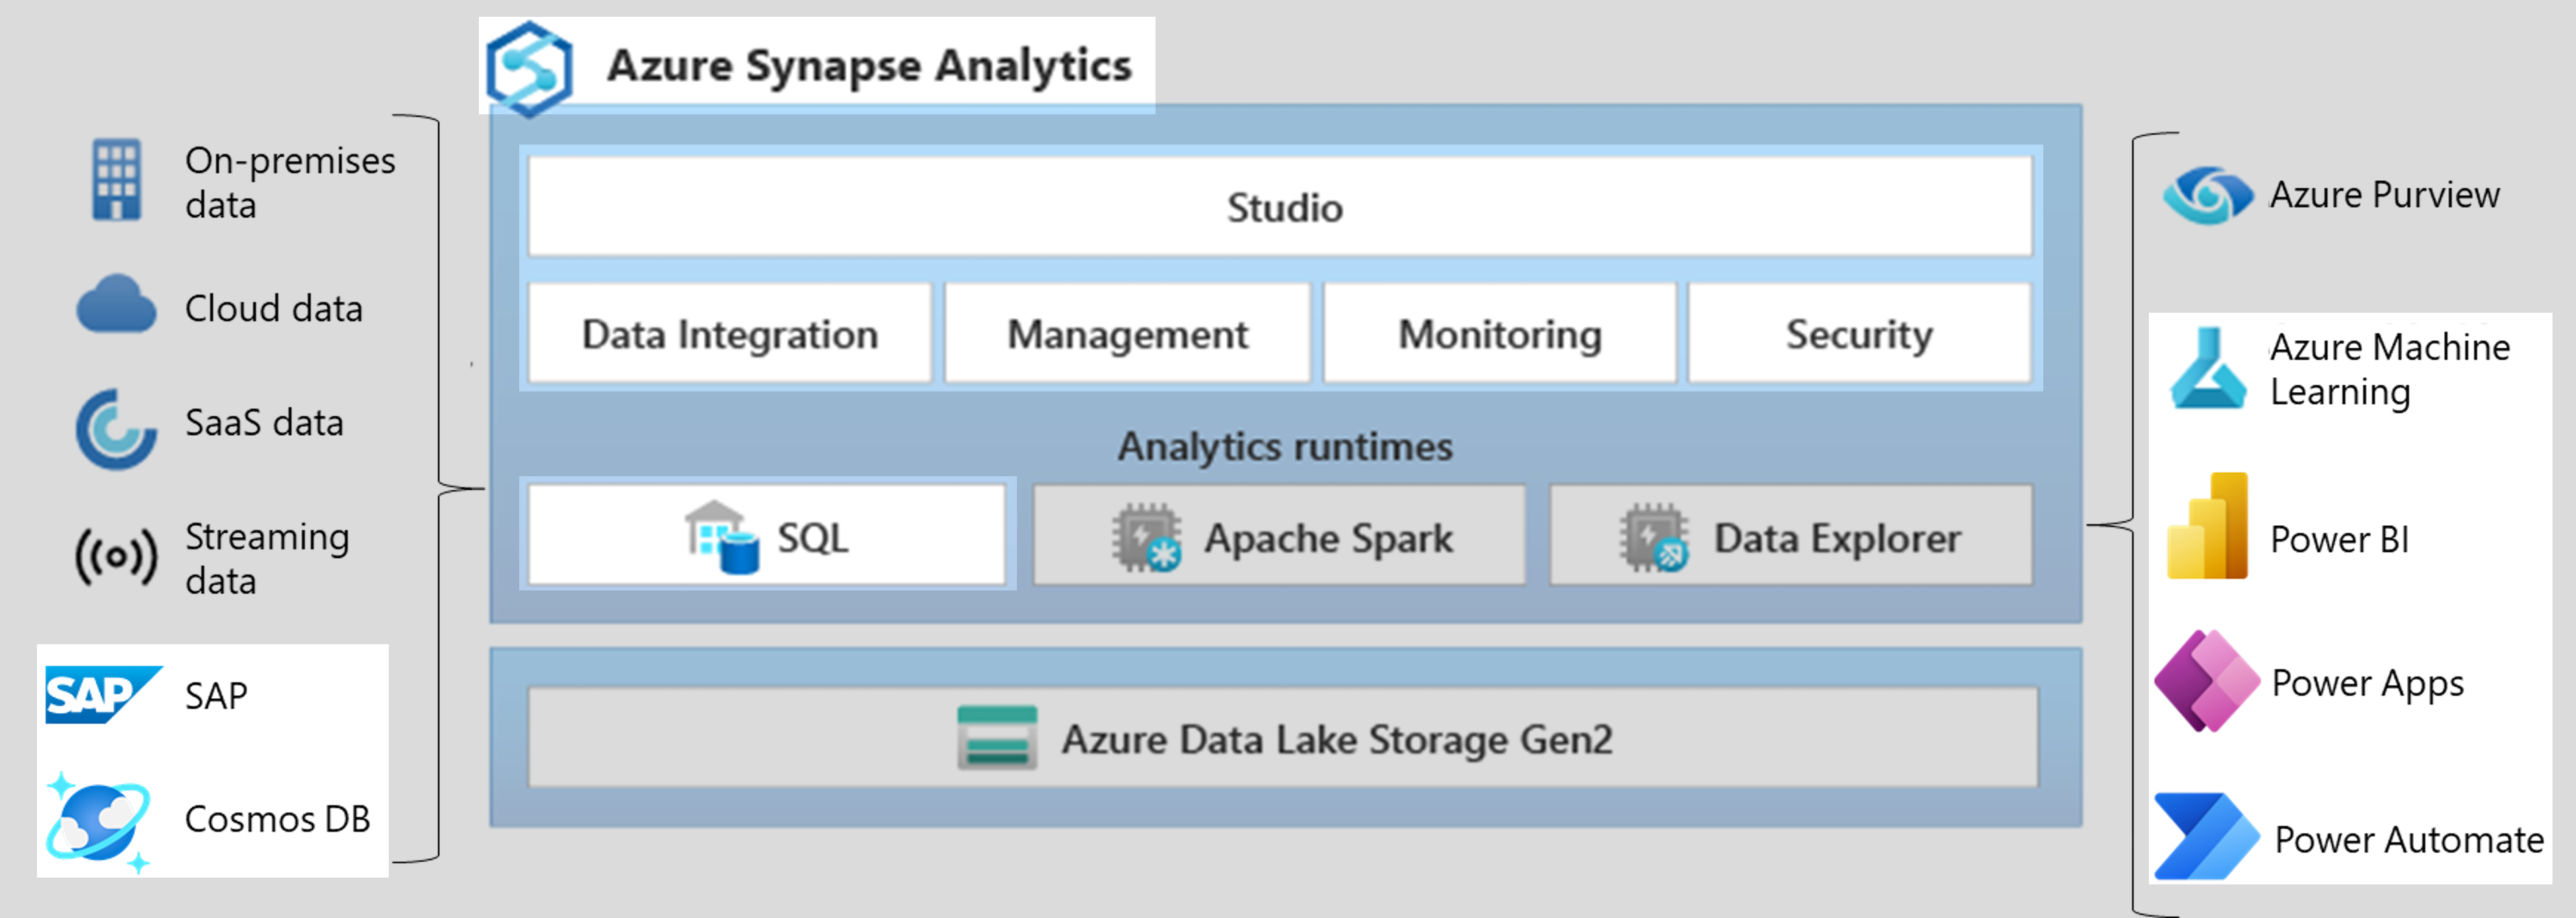 Azure Synapse Analytics のコンポーネントと、左側に潜在的なデータ ソース、右側に Azure Synapse と深く統合された Azure サービスを示す図。強調表示されているコンポーネント:S A P および Cosmos DB、Synapse Studio、SQL、Azure Machine Learning、Power BI、Power Apps、Power Automate。